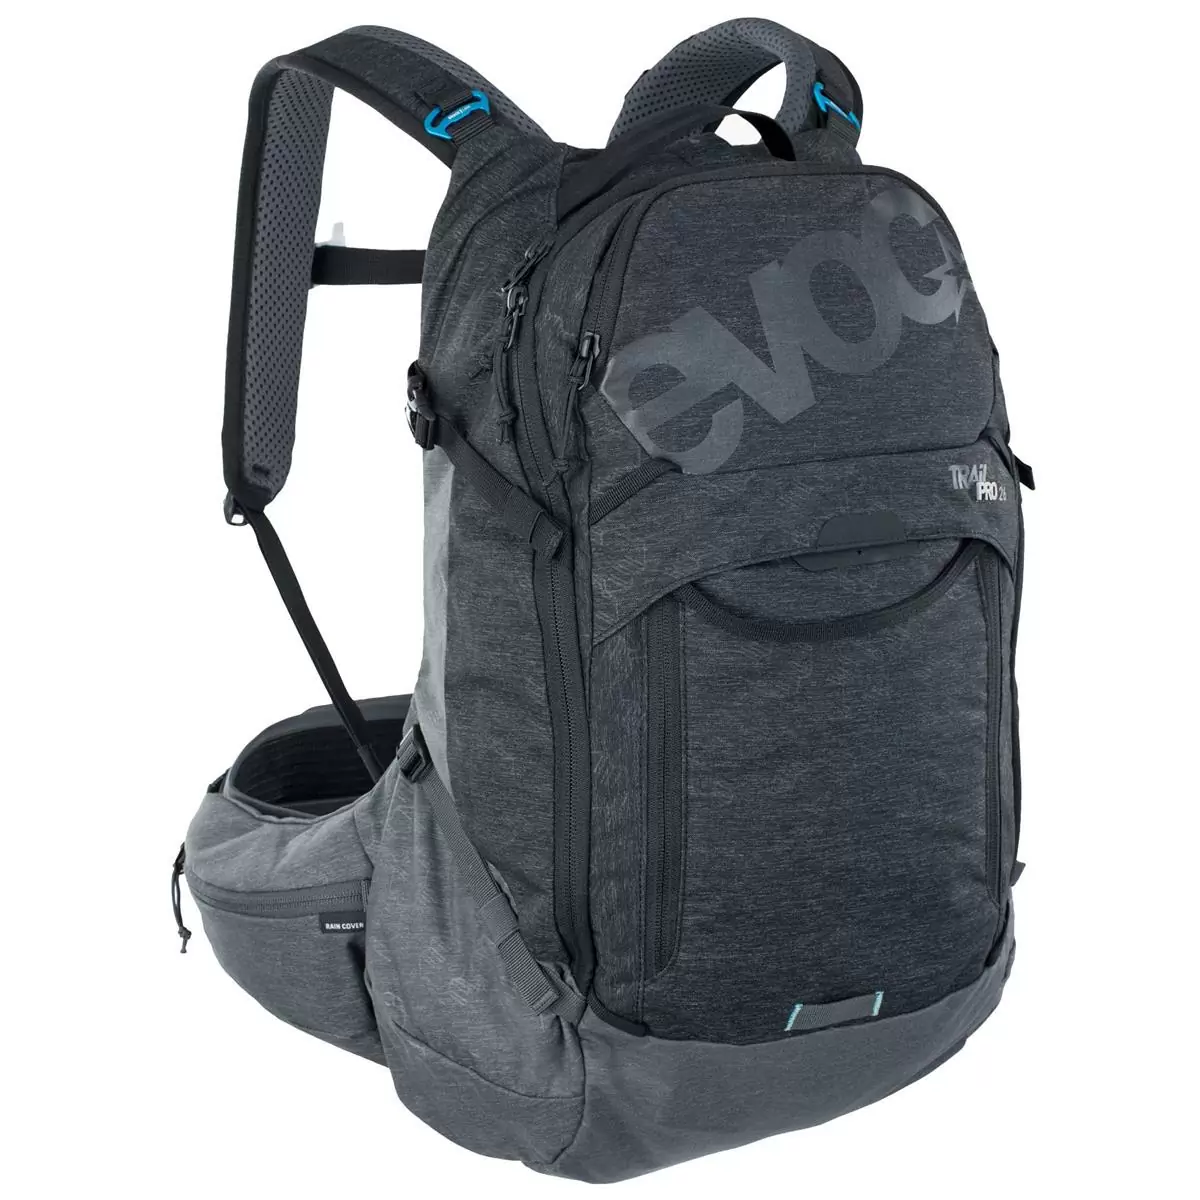 Backpack Trail Pro 26 litri black - carbon grey size S/M - image